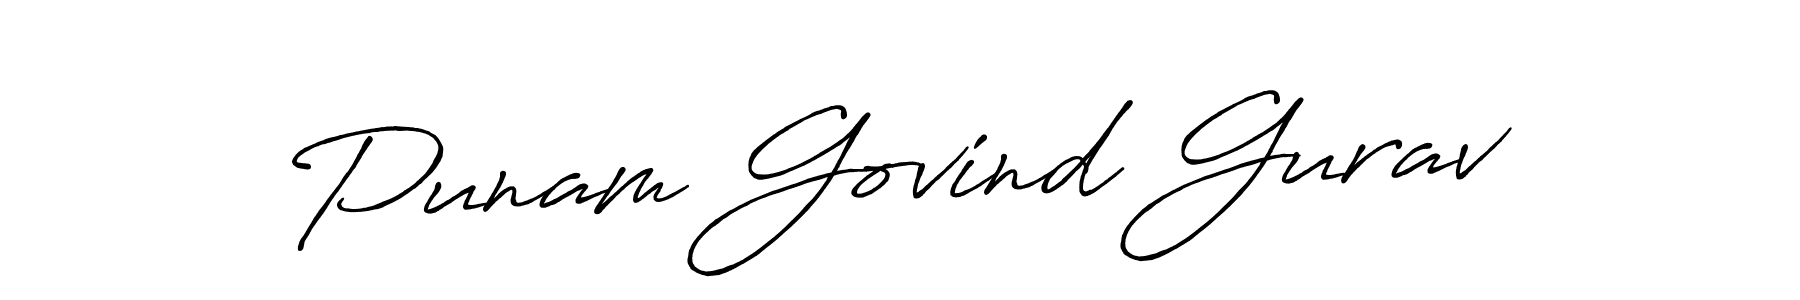 How to Draw Punam Govind Gurav signature style? Antro_Vectra_Bolder is a latest design signature styles for name Punam Govind Gurav. Punam Govind Gurav signature style 7 images and pictures png